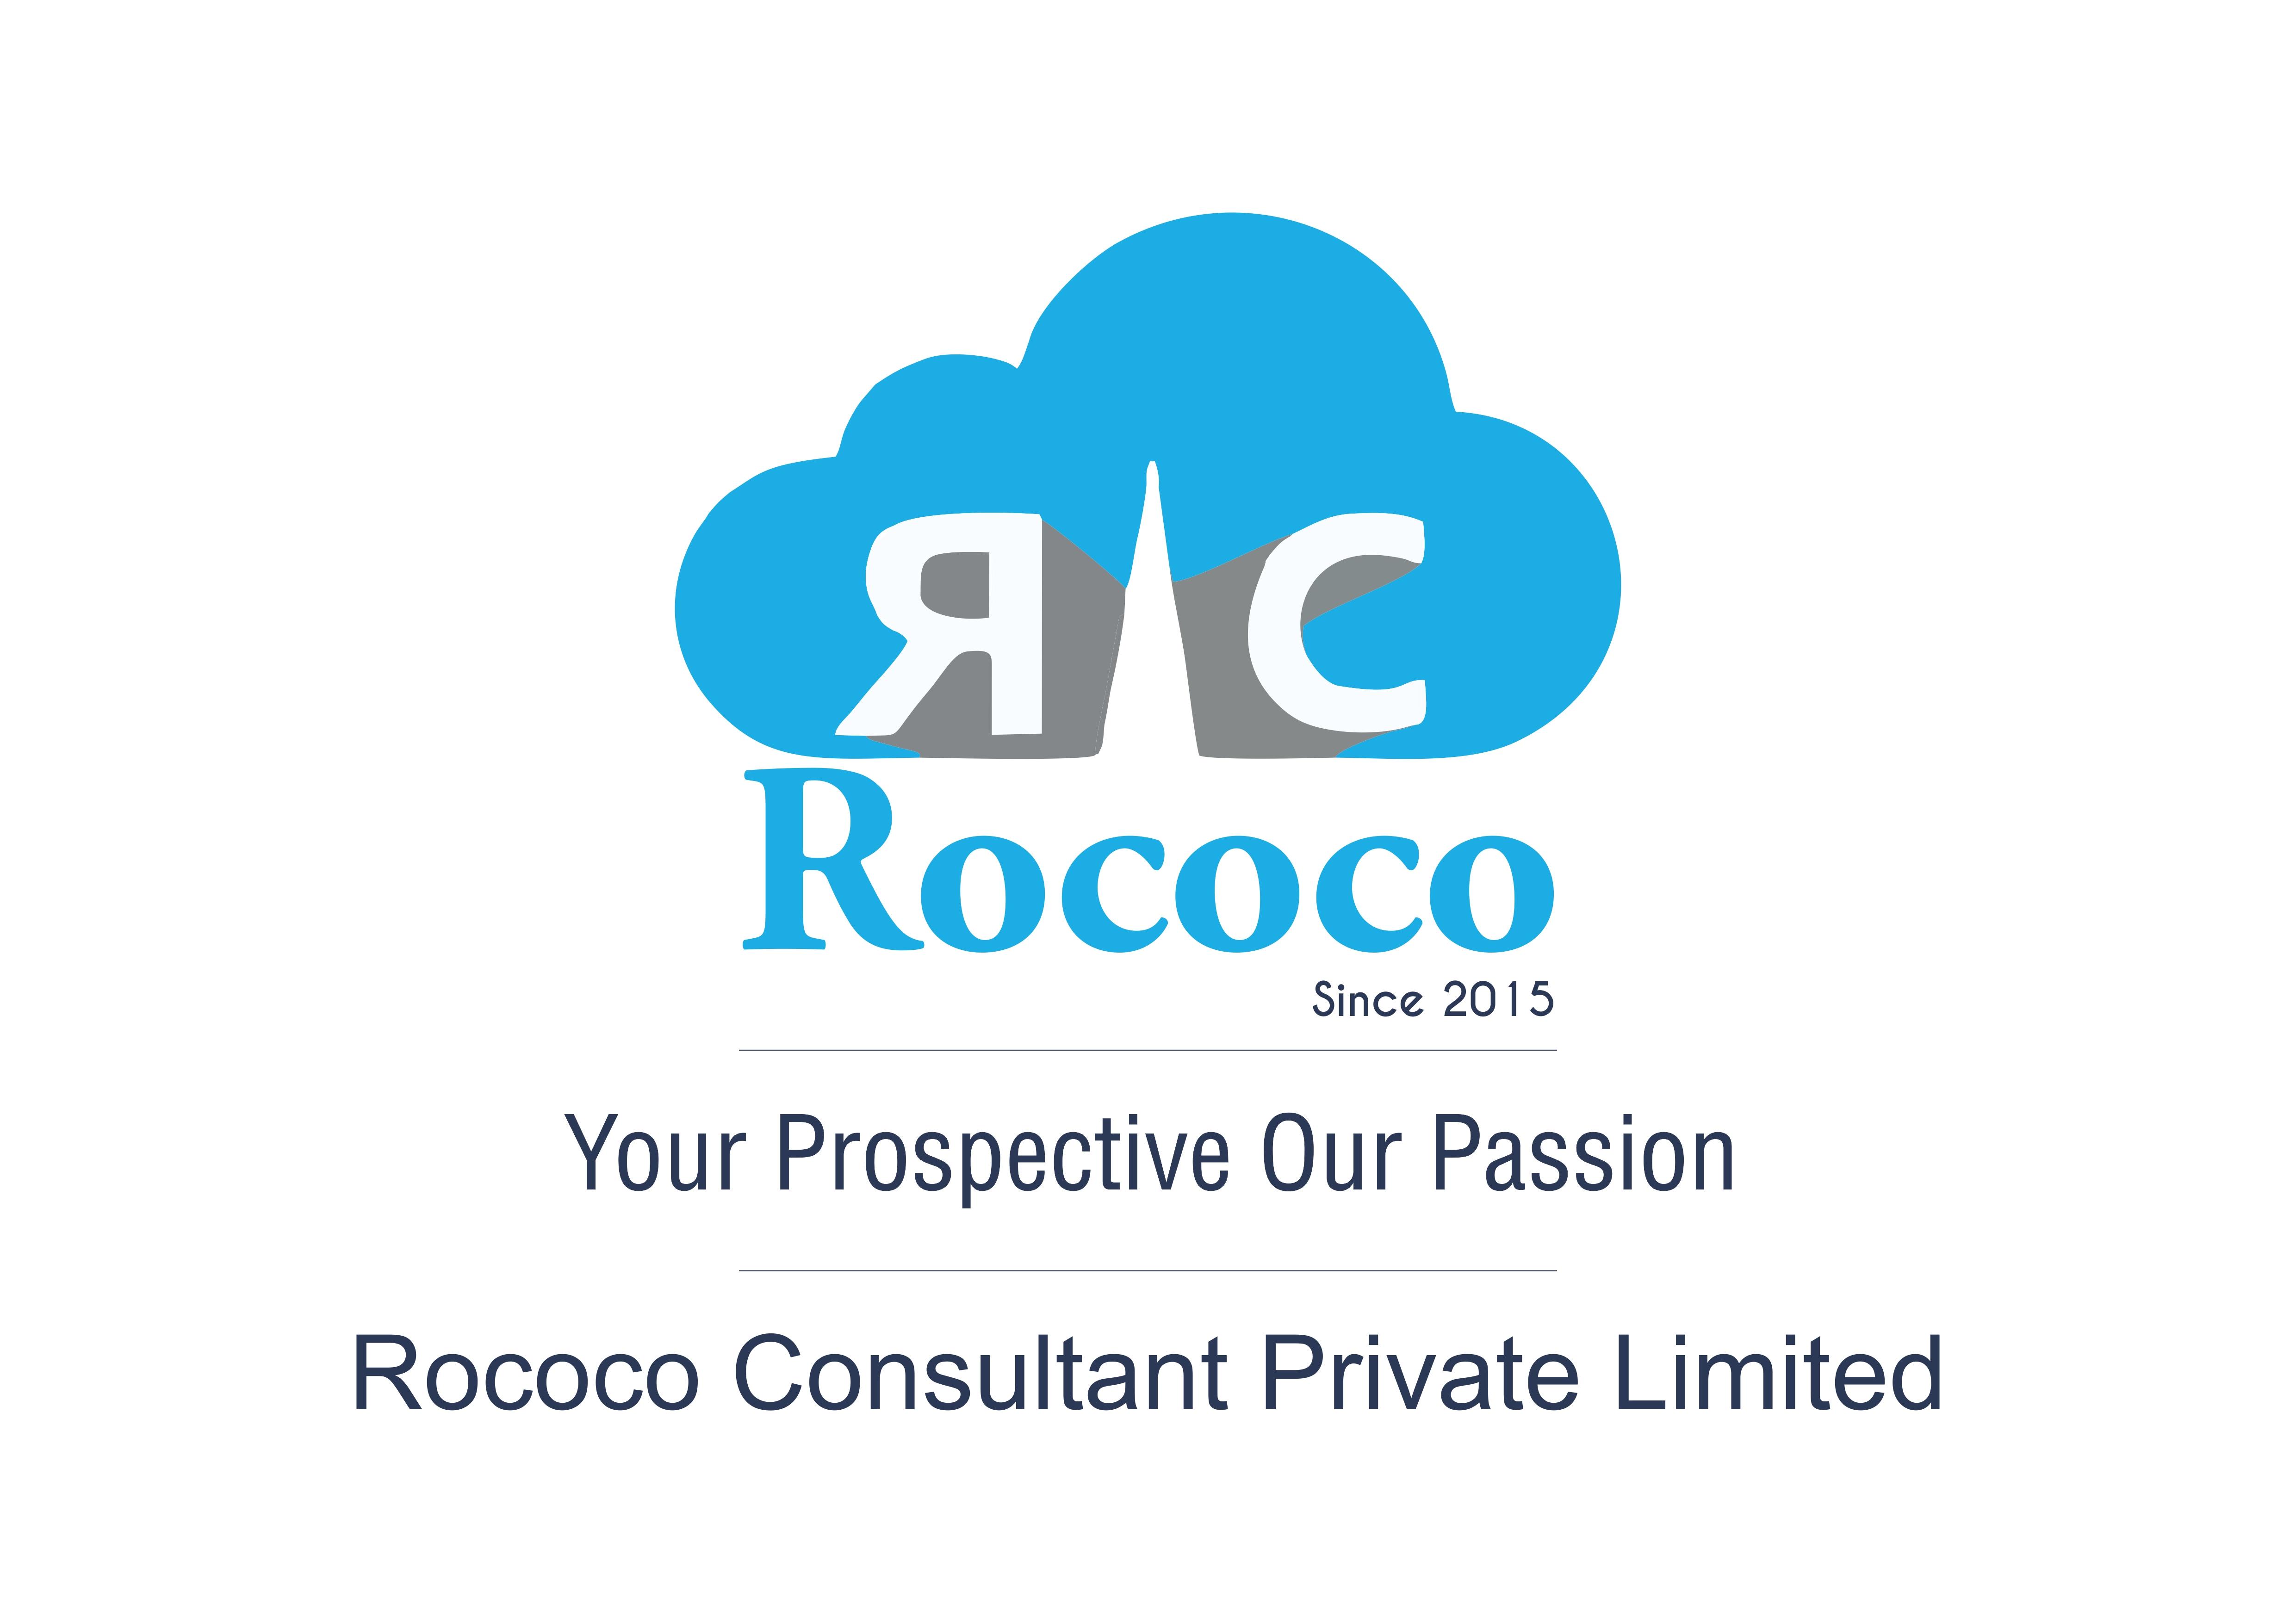 Rococo Consultant Pvt Ltd profile on Qualified.One